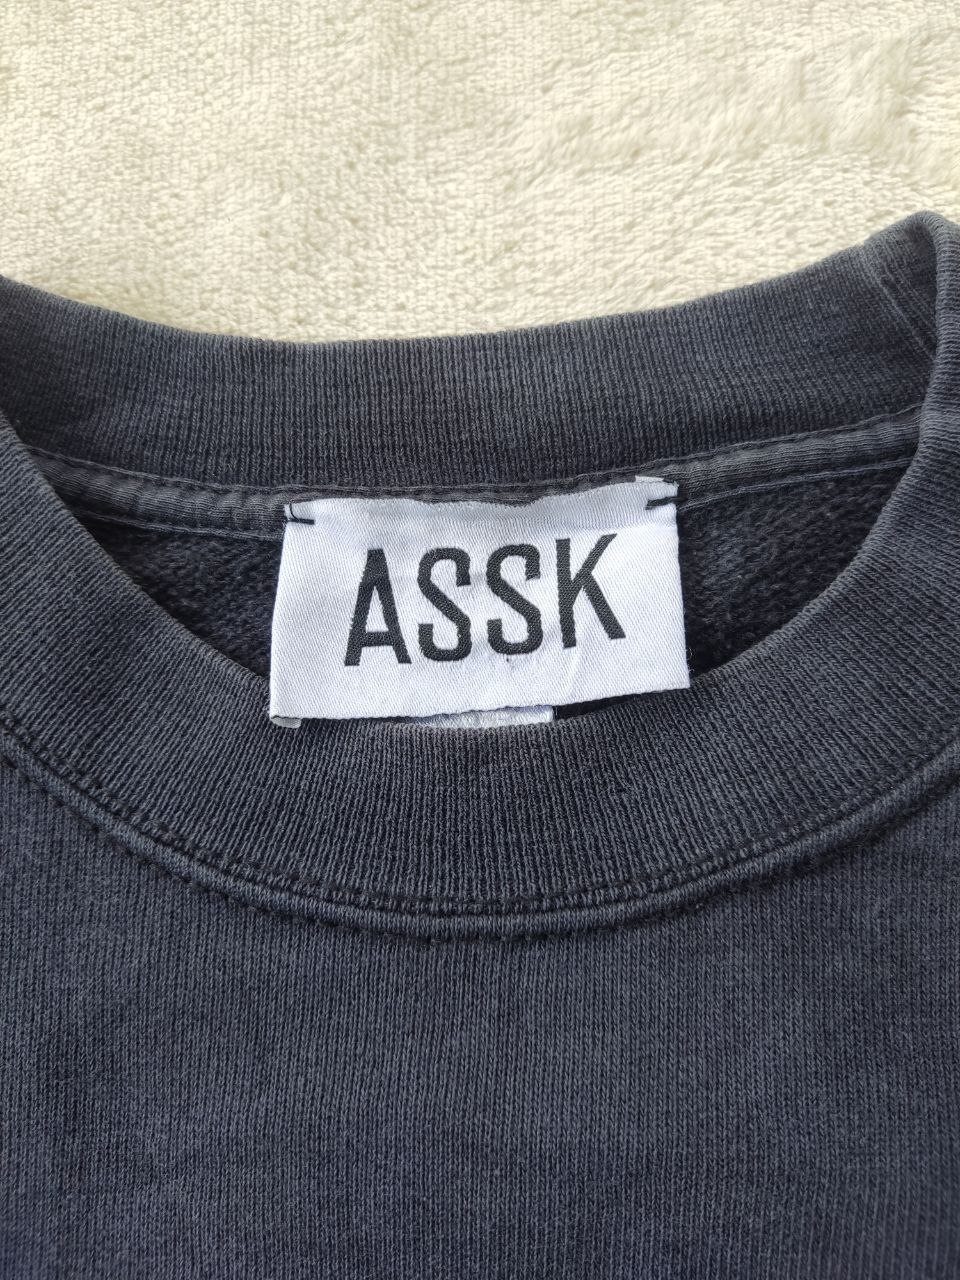 Rare🔥 ASSK Compass Collection Fall/Winter 2014-15 Paris France Sweatshirts - 8